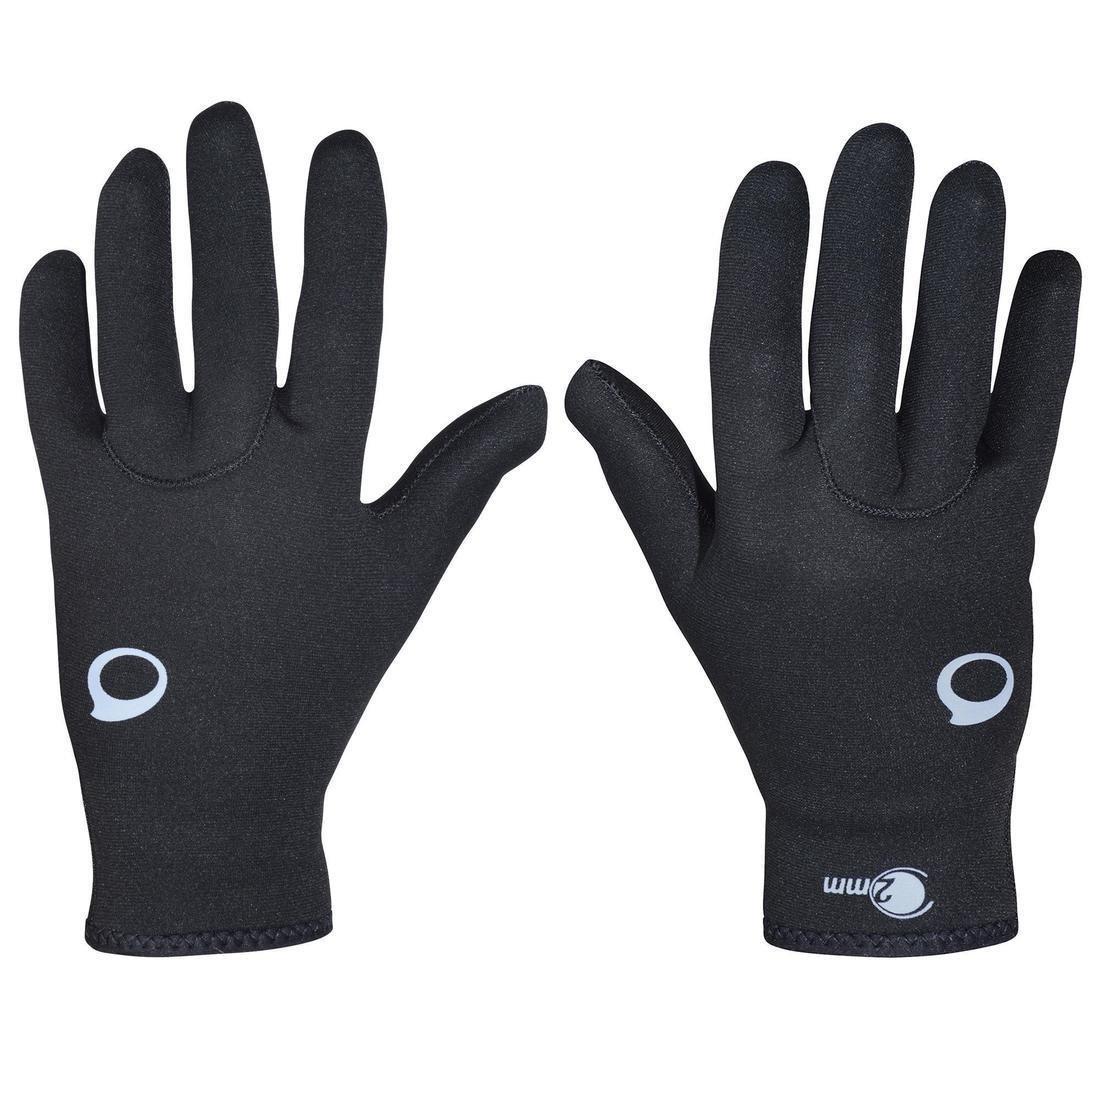 SUBEA - Scd Scuba Diving 2 Mm Neoprene Gloves, Black